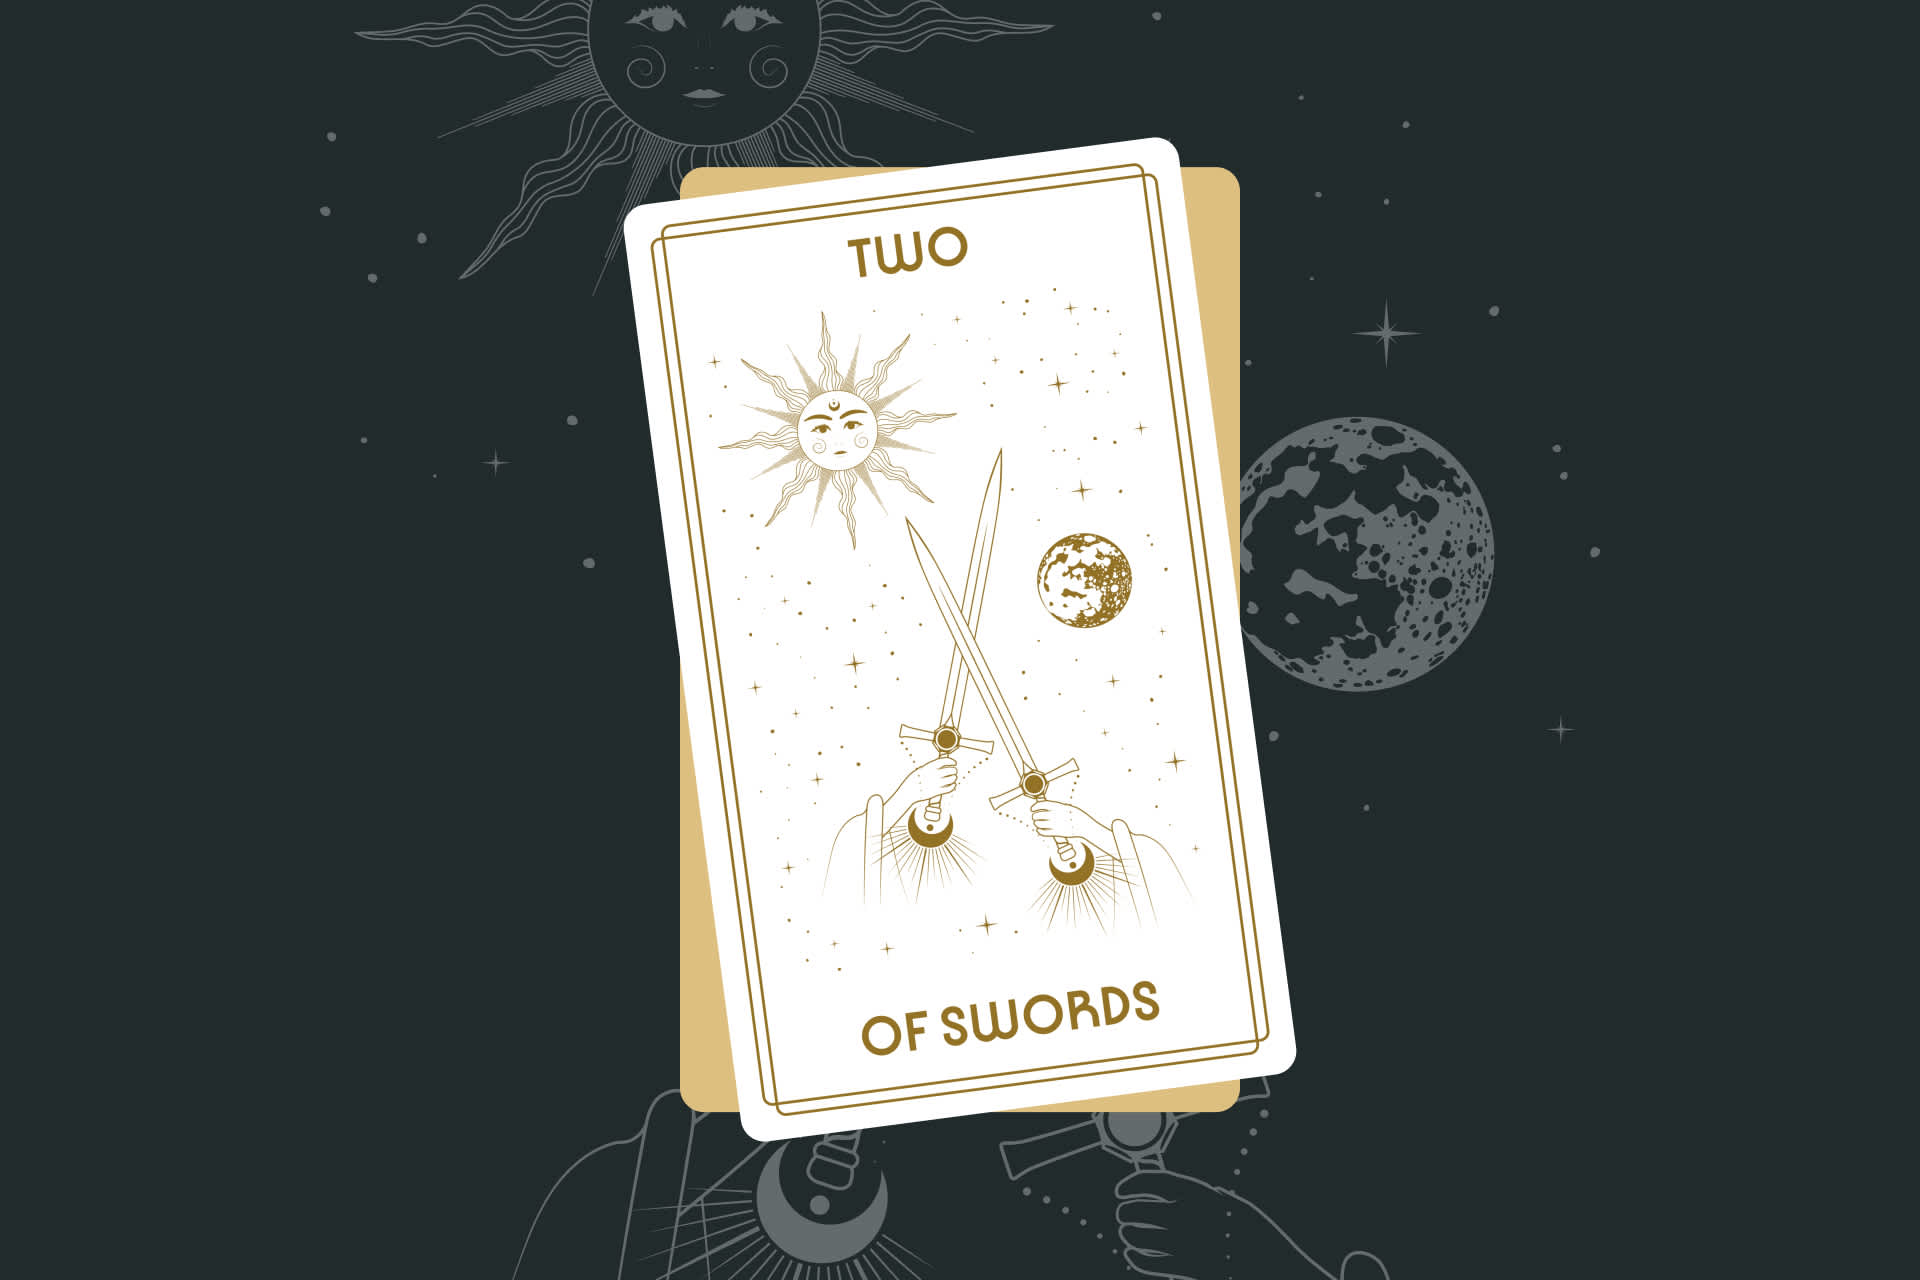 Two of Swords Tarot Card